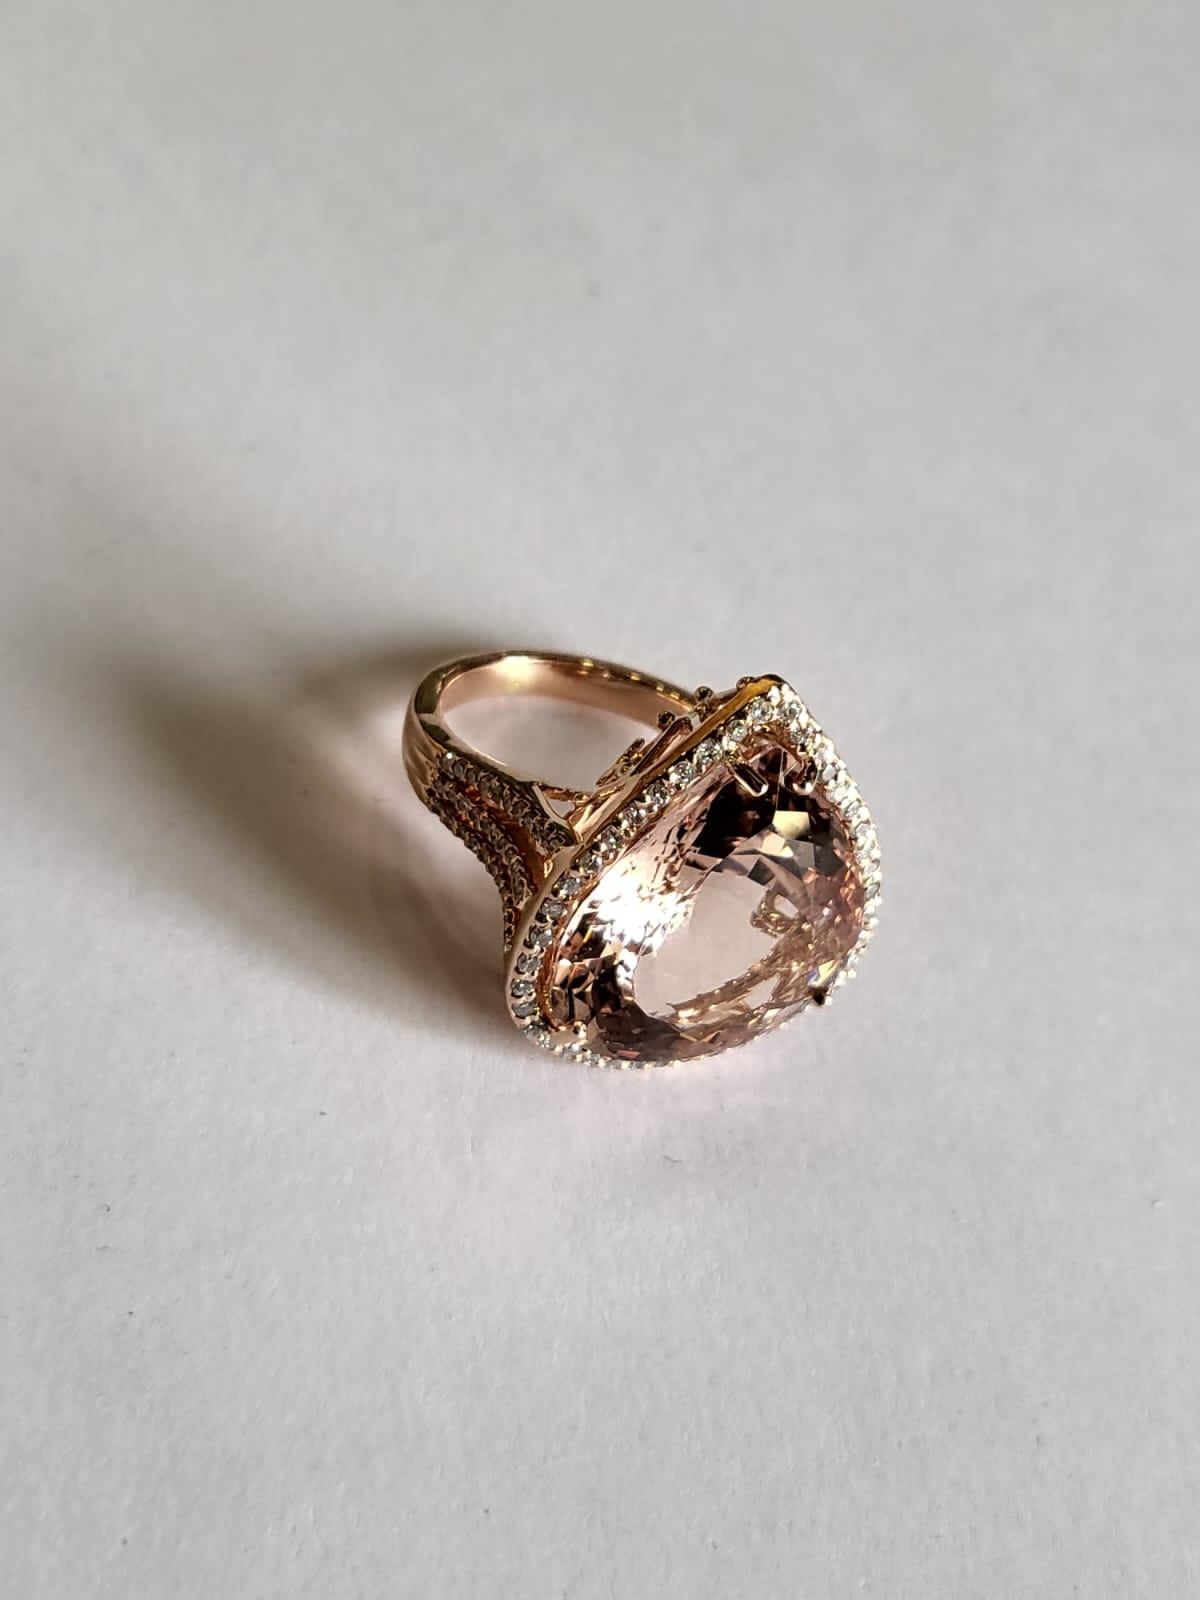 Pear Cut Set in 18k Rose Gold, 16.21 Carats Morganite & Diamonds Engagement/Cocktail Ring